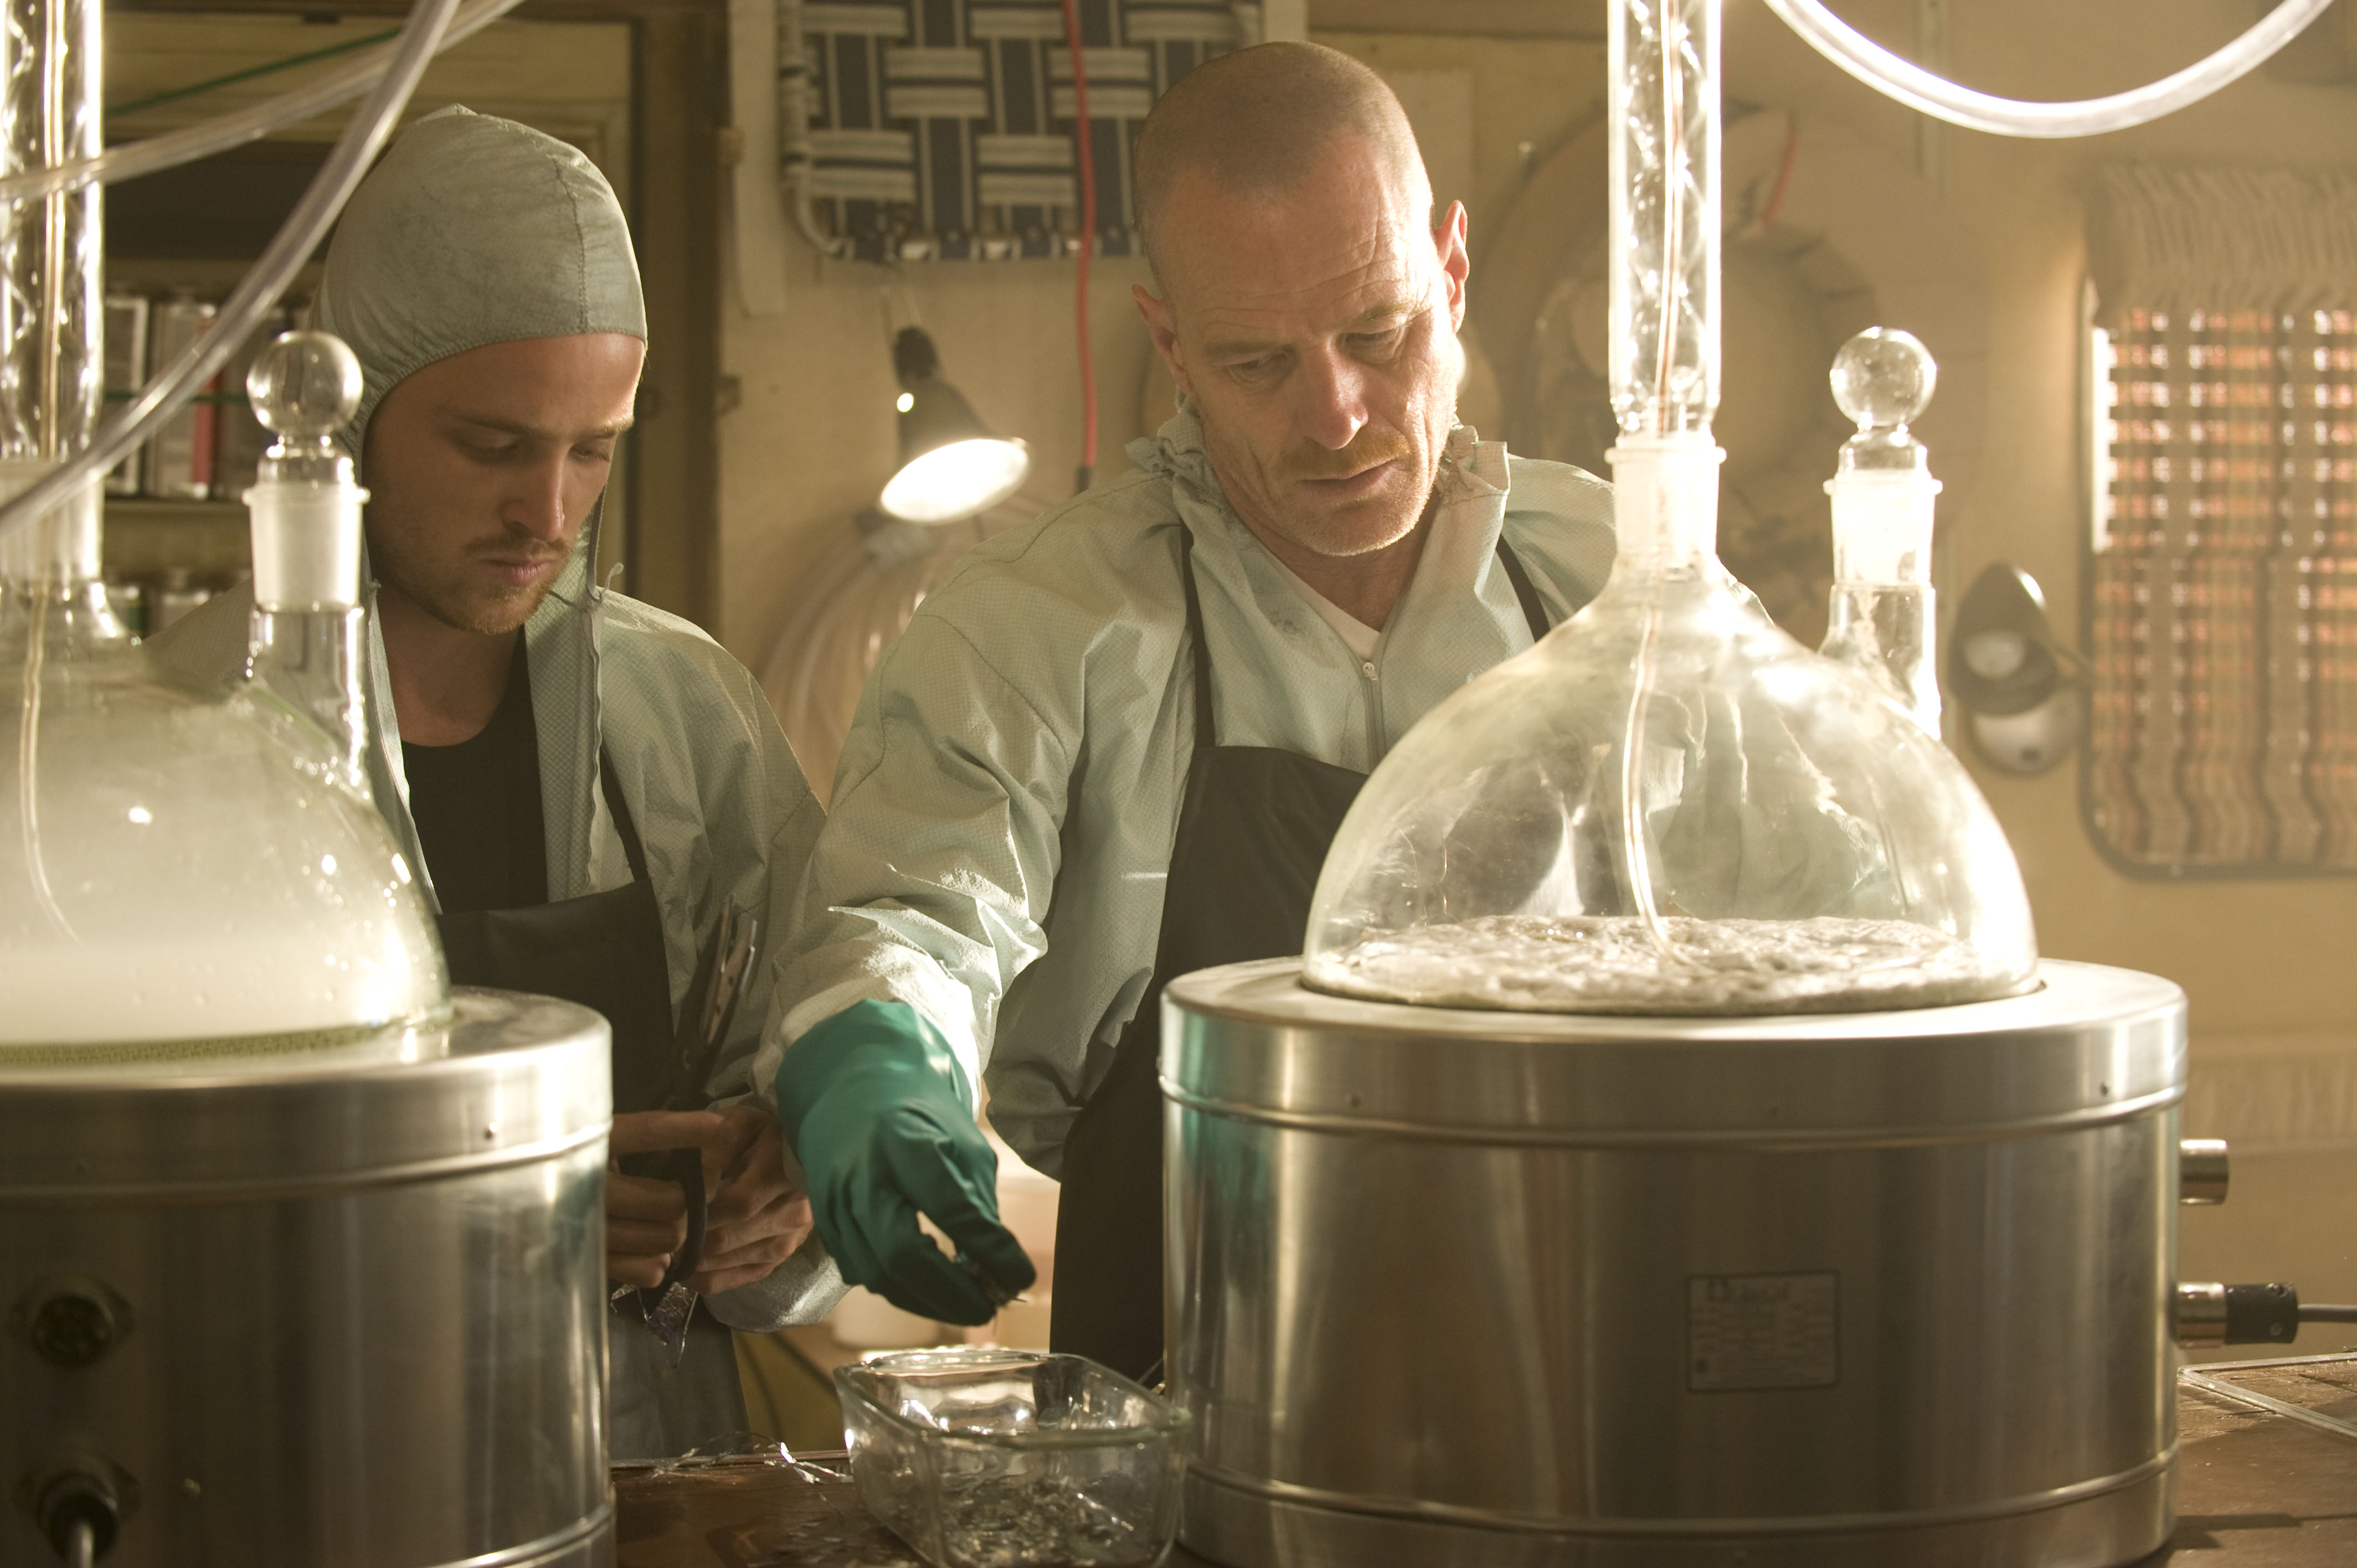 Jesse Pinkman (Aaron Paul) and Walter White (Bryan Cranston), who will cameo in 'Better Call Saul' Season 6, cooking meth in 'Breaking Bad' Season 2